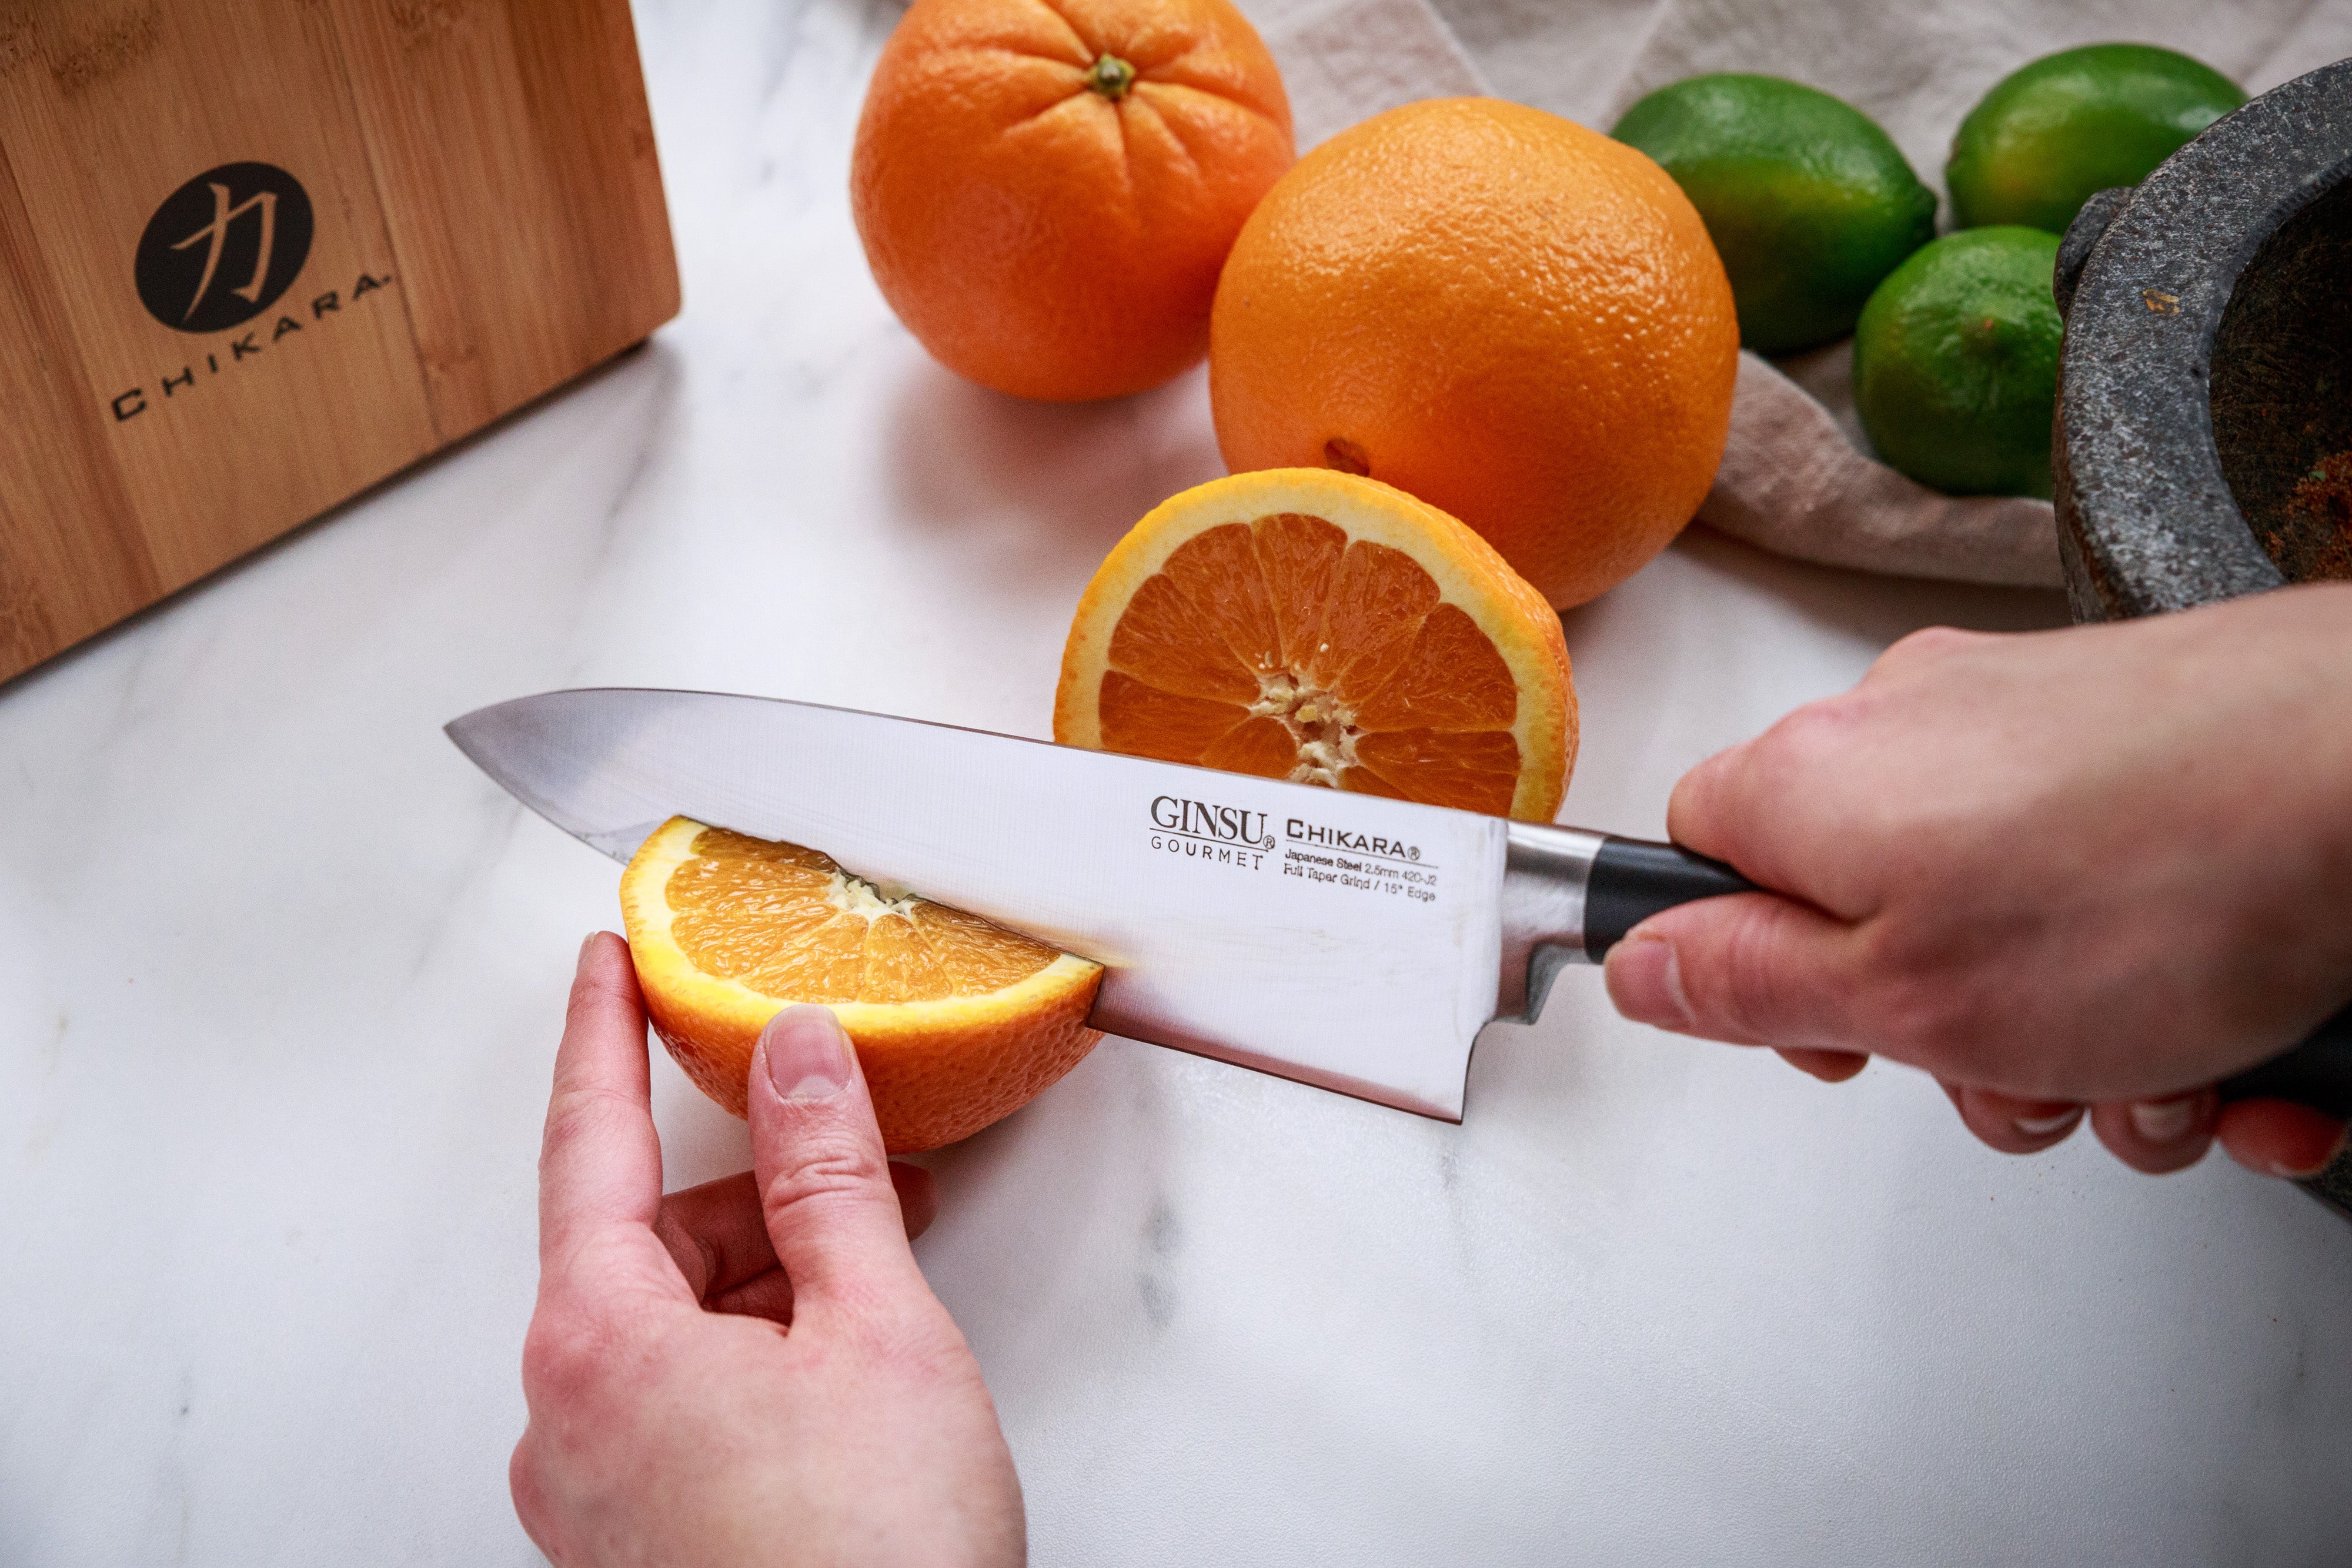 Dexter Gift, Slice of Life, Engraved Knife, Santoku Ginsu 